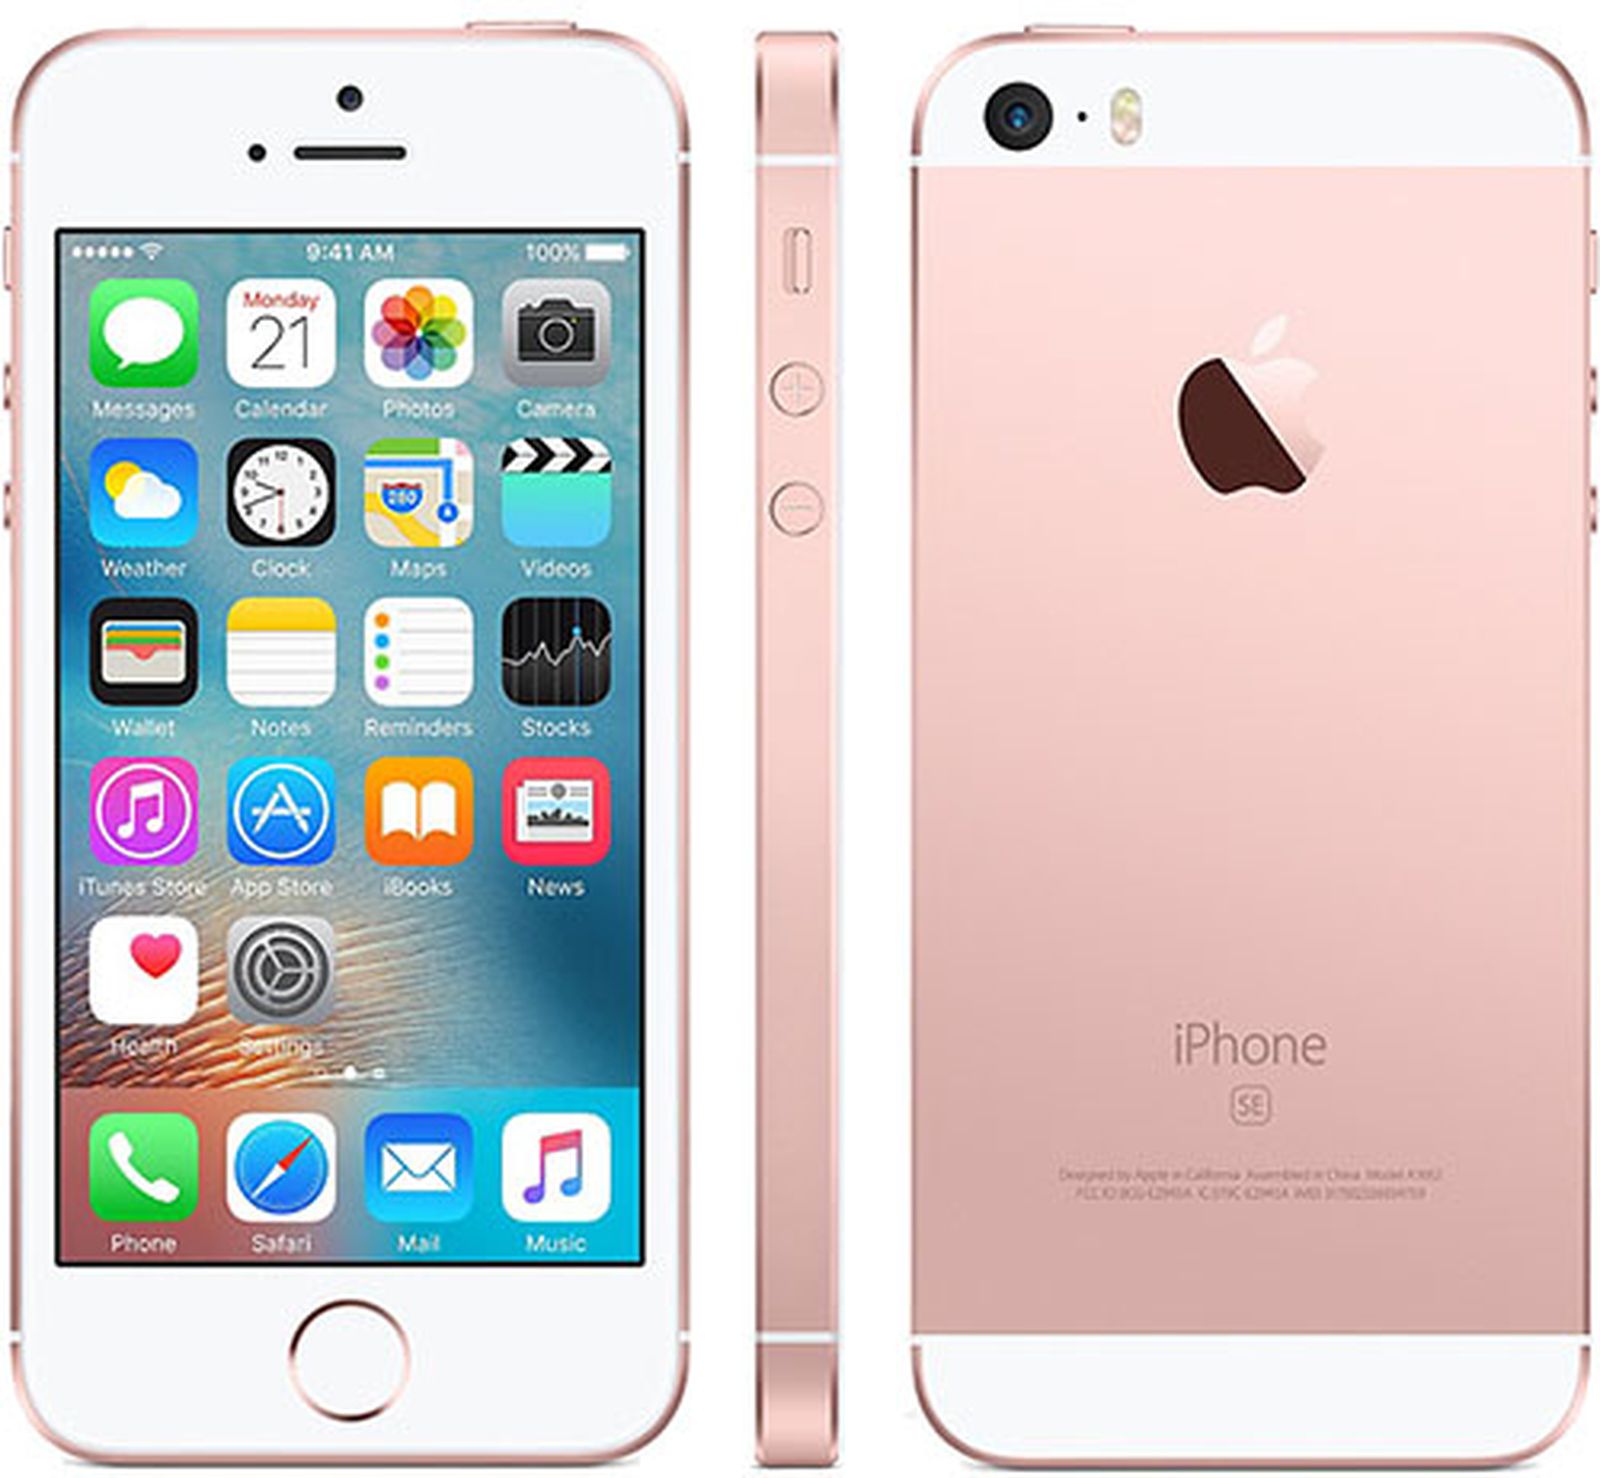 Apple Doubles iPhone SE Storage to 32GB and 128GB - MacRumors